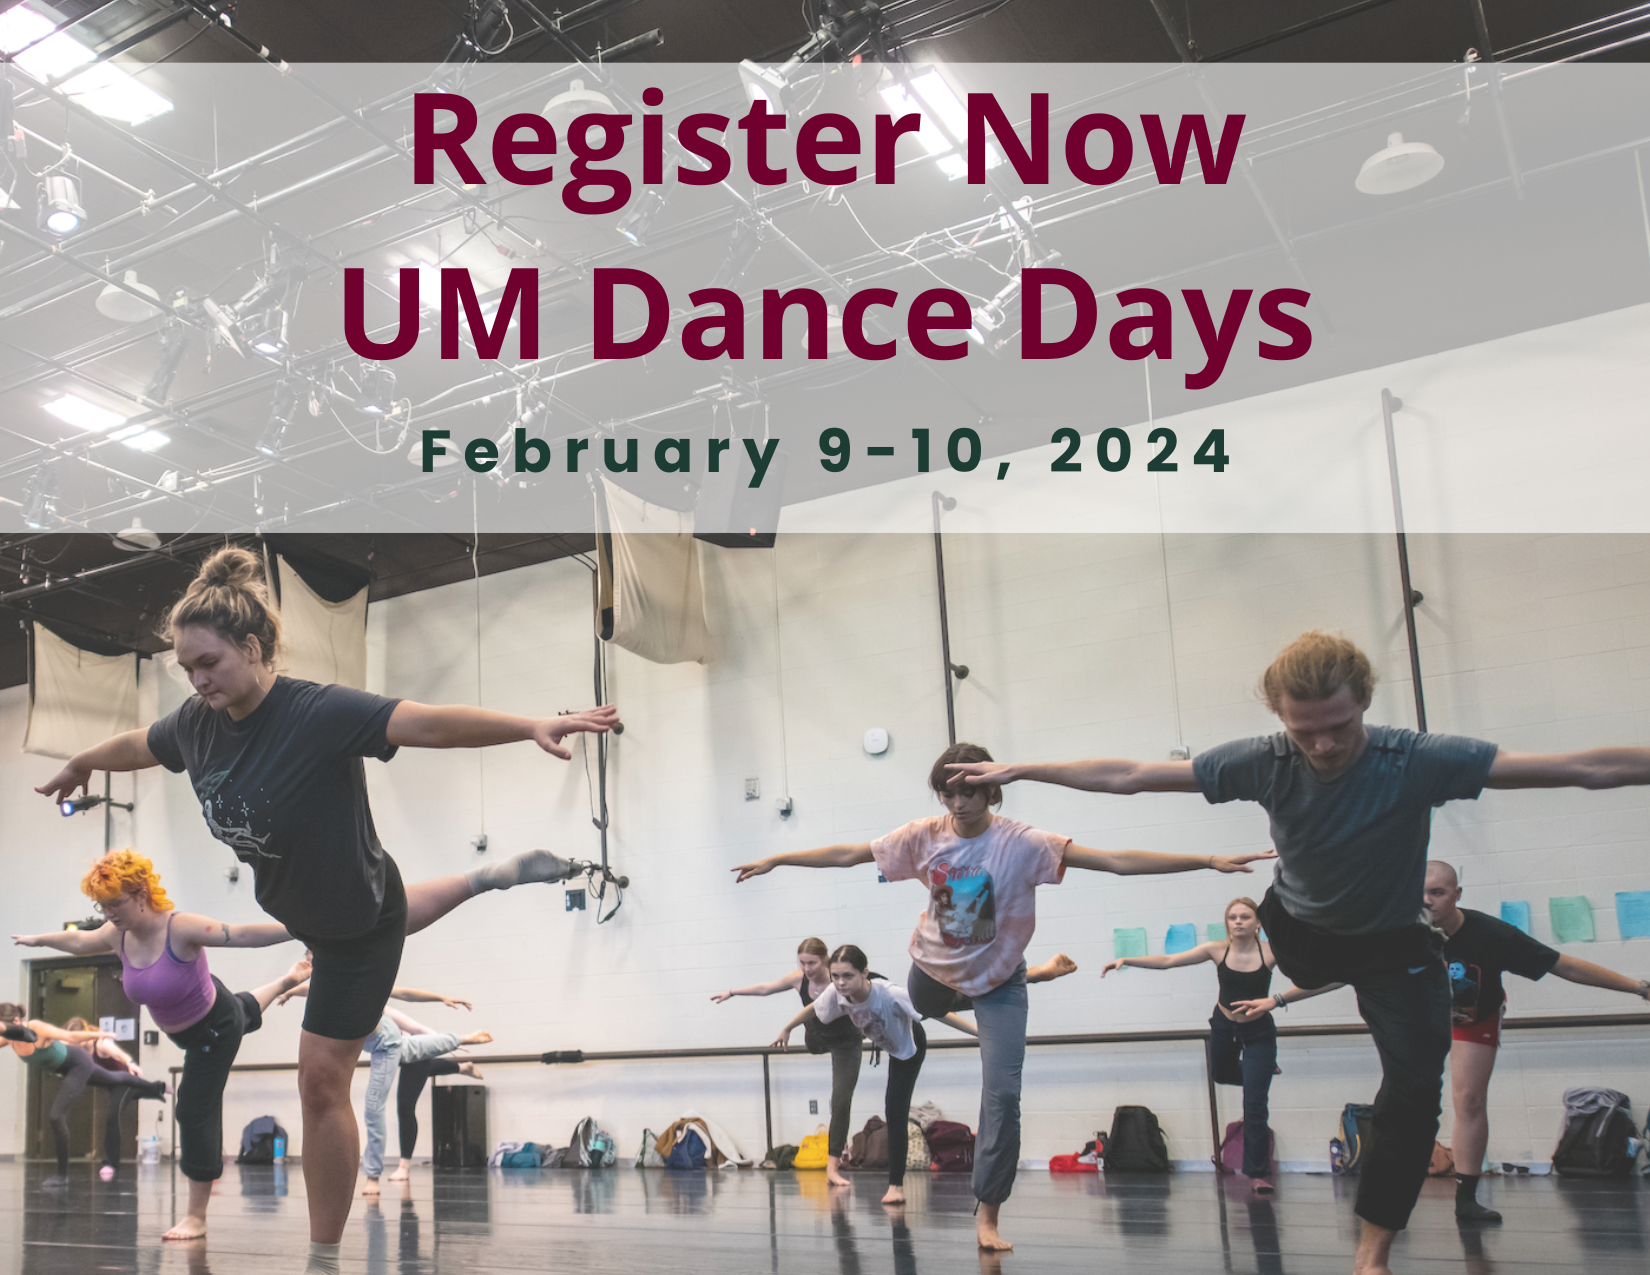 Register Now for UM Dance Days, February 9-10, 2024